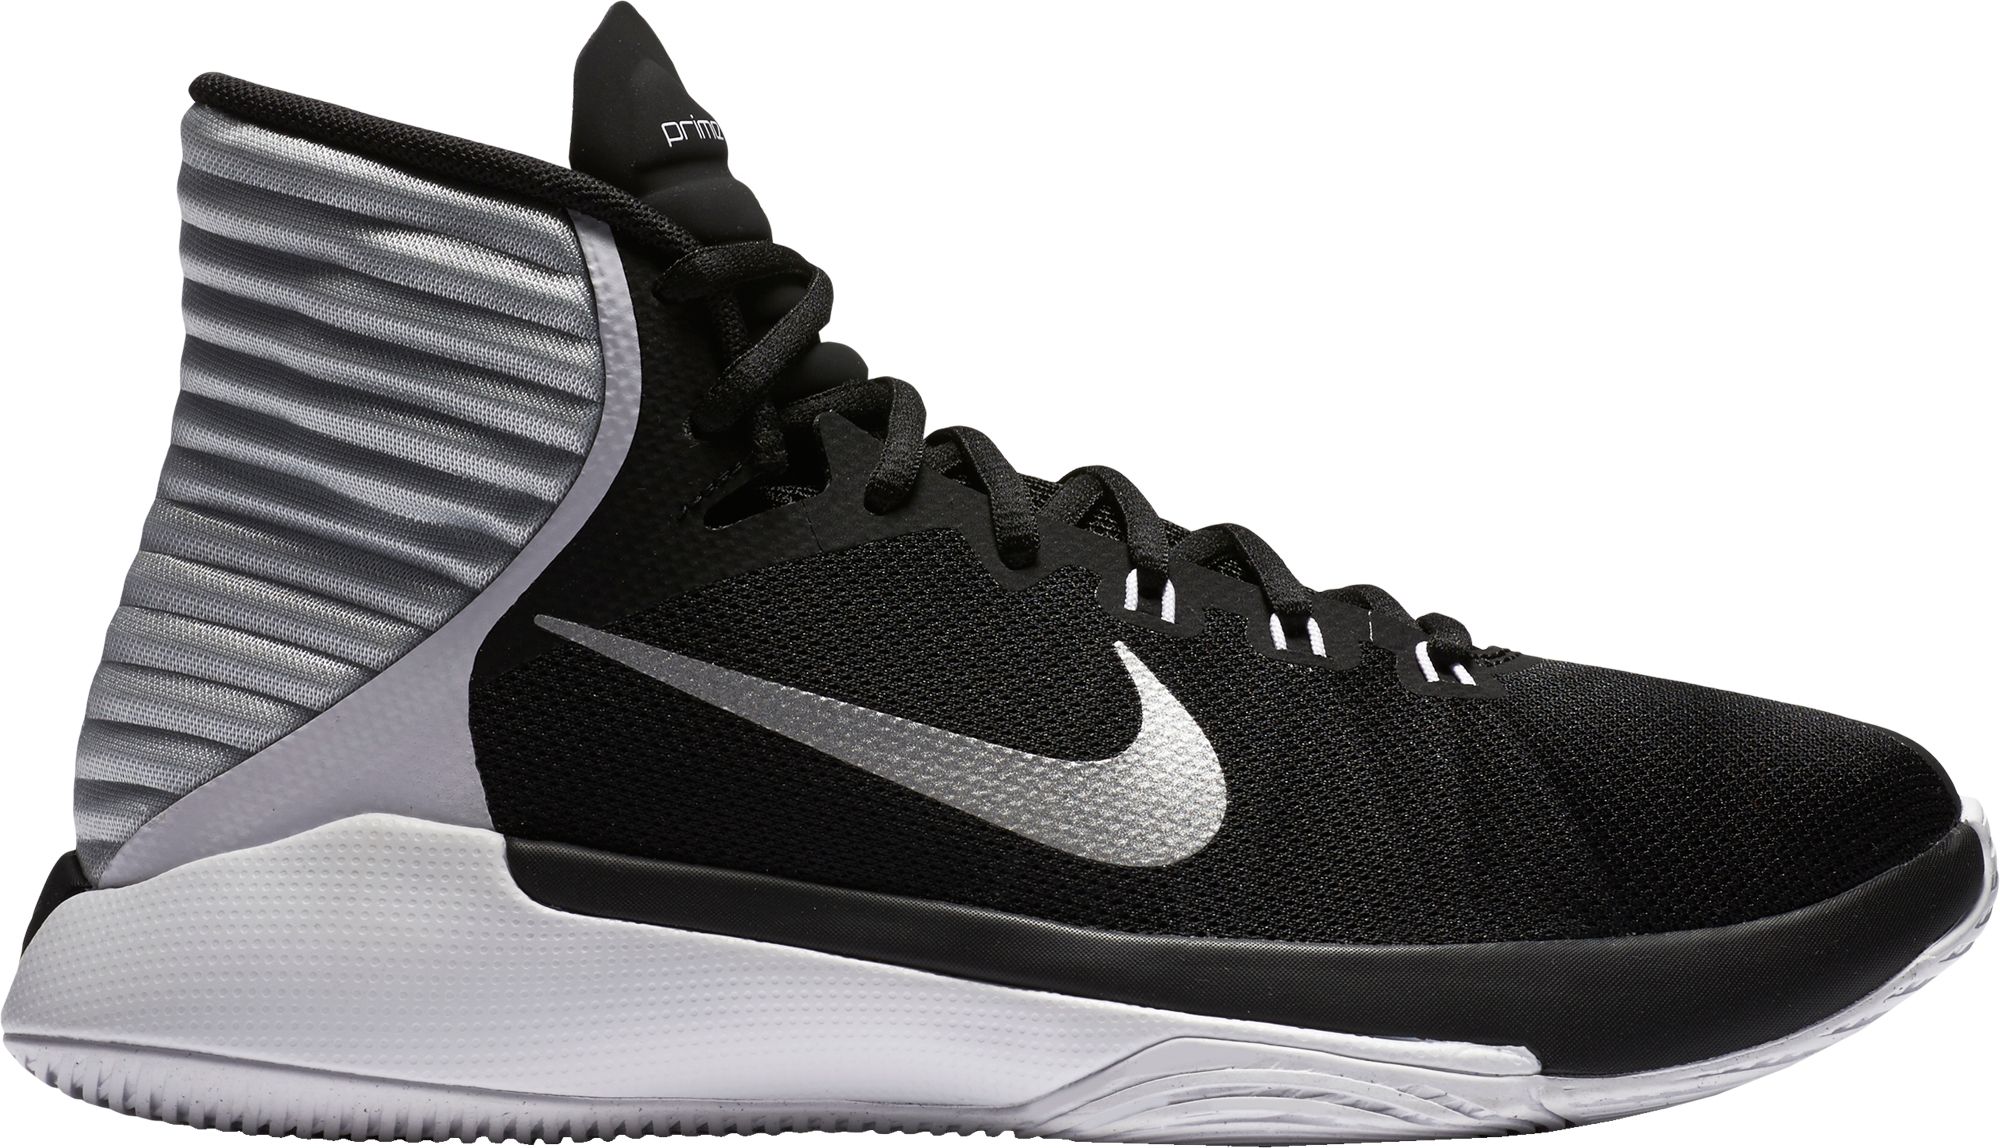 Nike Basketball Shoe Black And White | Heavenly Nightlife